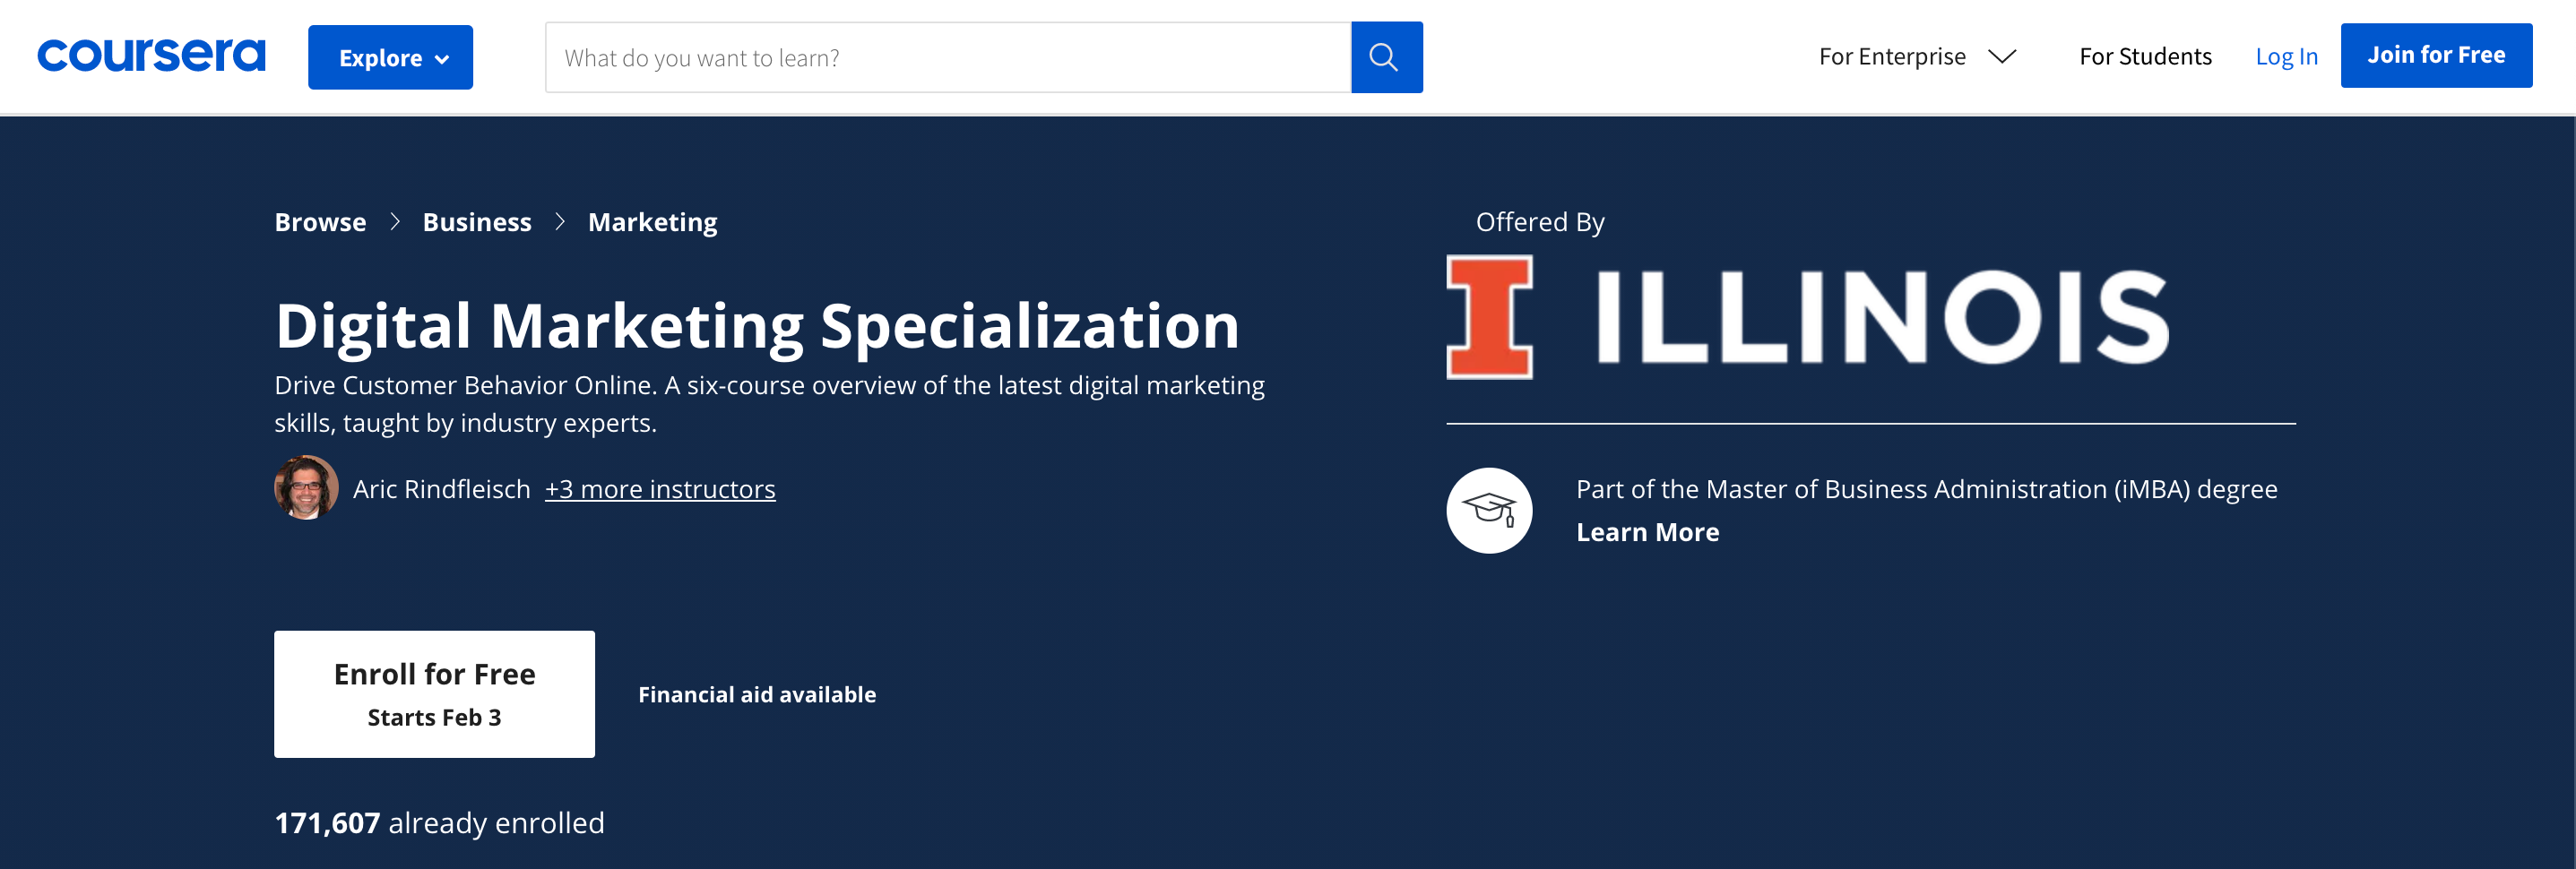 Digital Marketing Specialization by University of Illinois